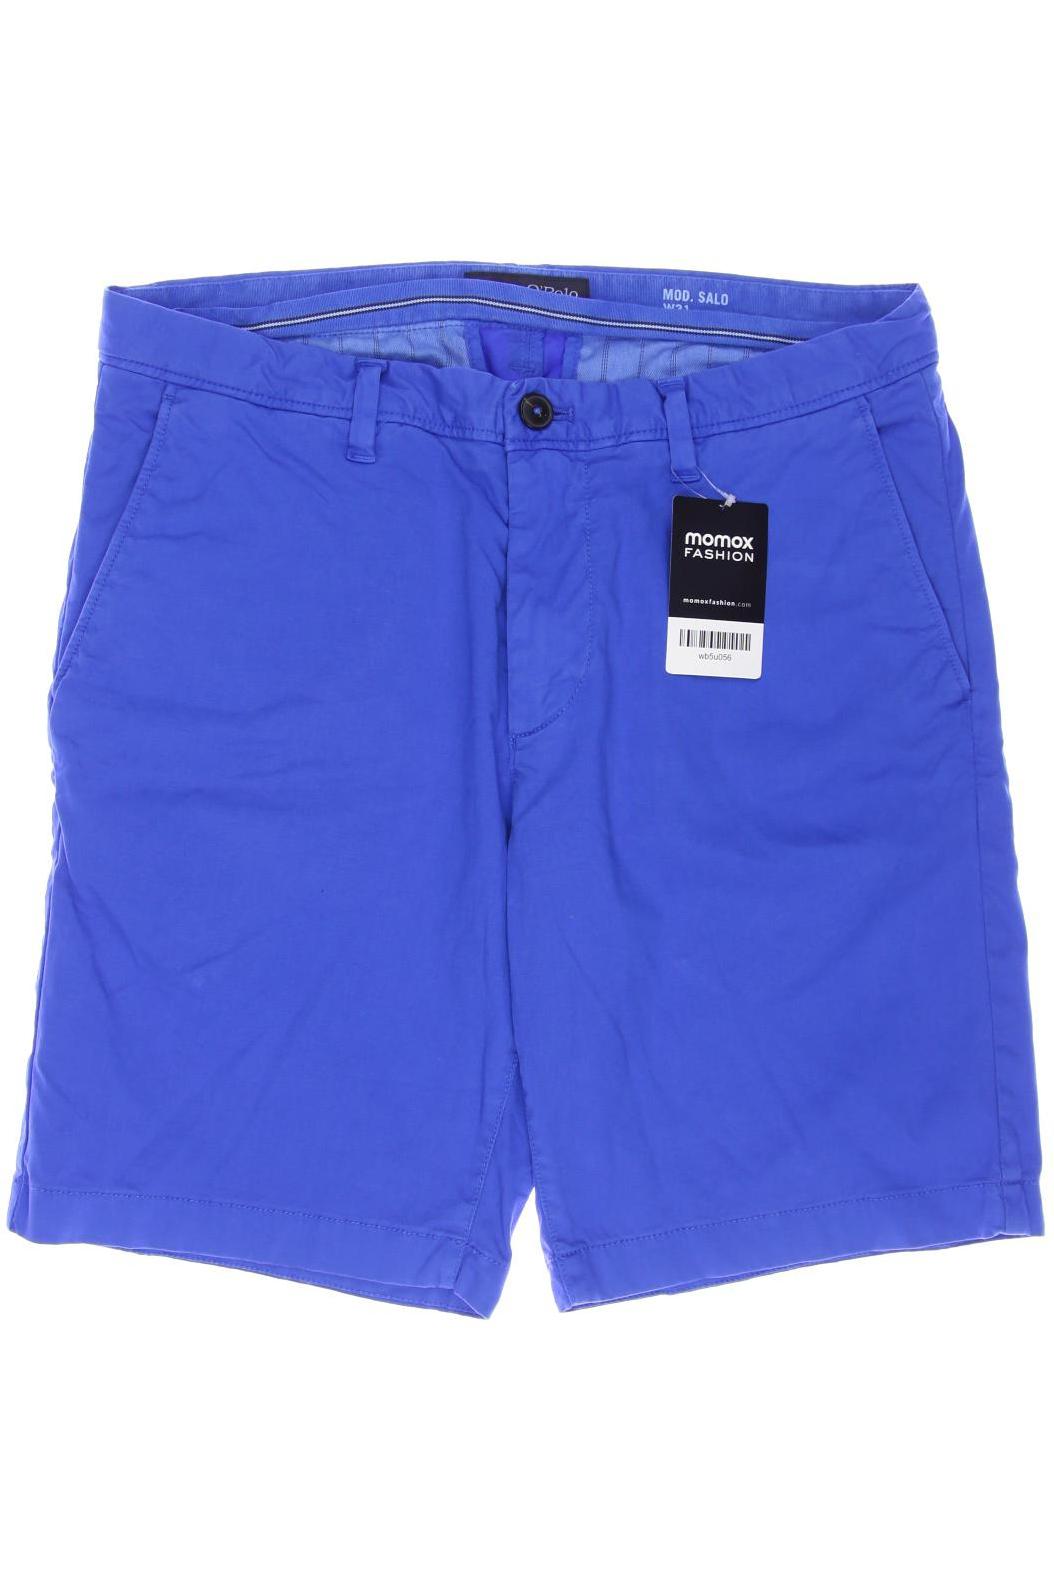 Marc O Polo Herren Shorts, blau, Gr. 48 von Marc O Polo